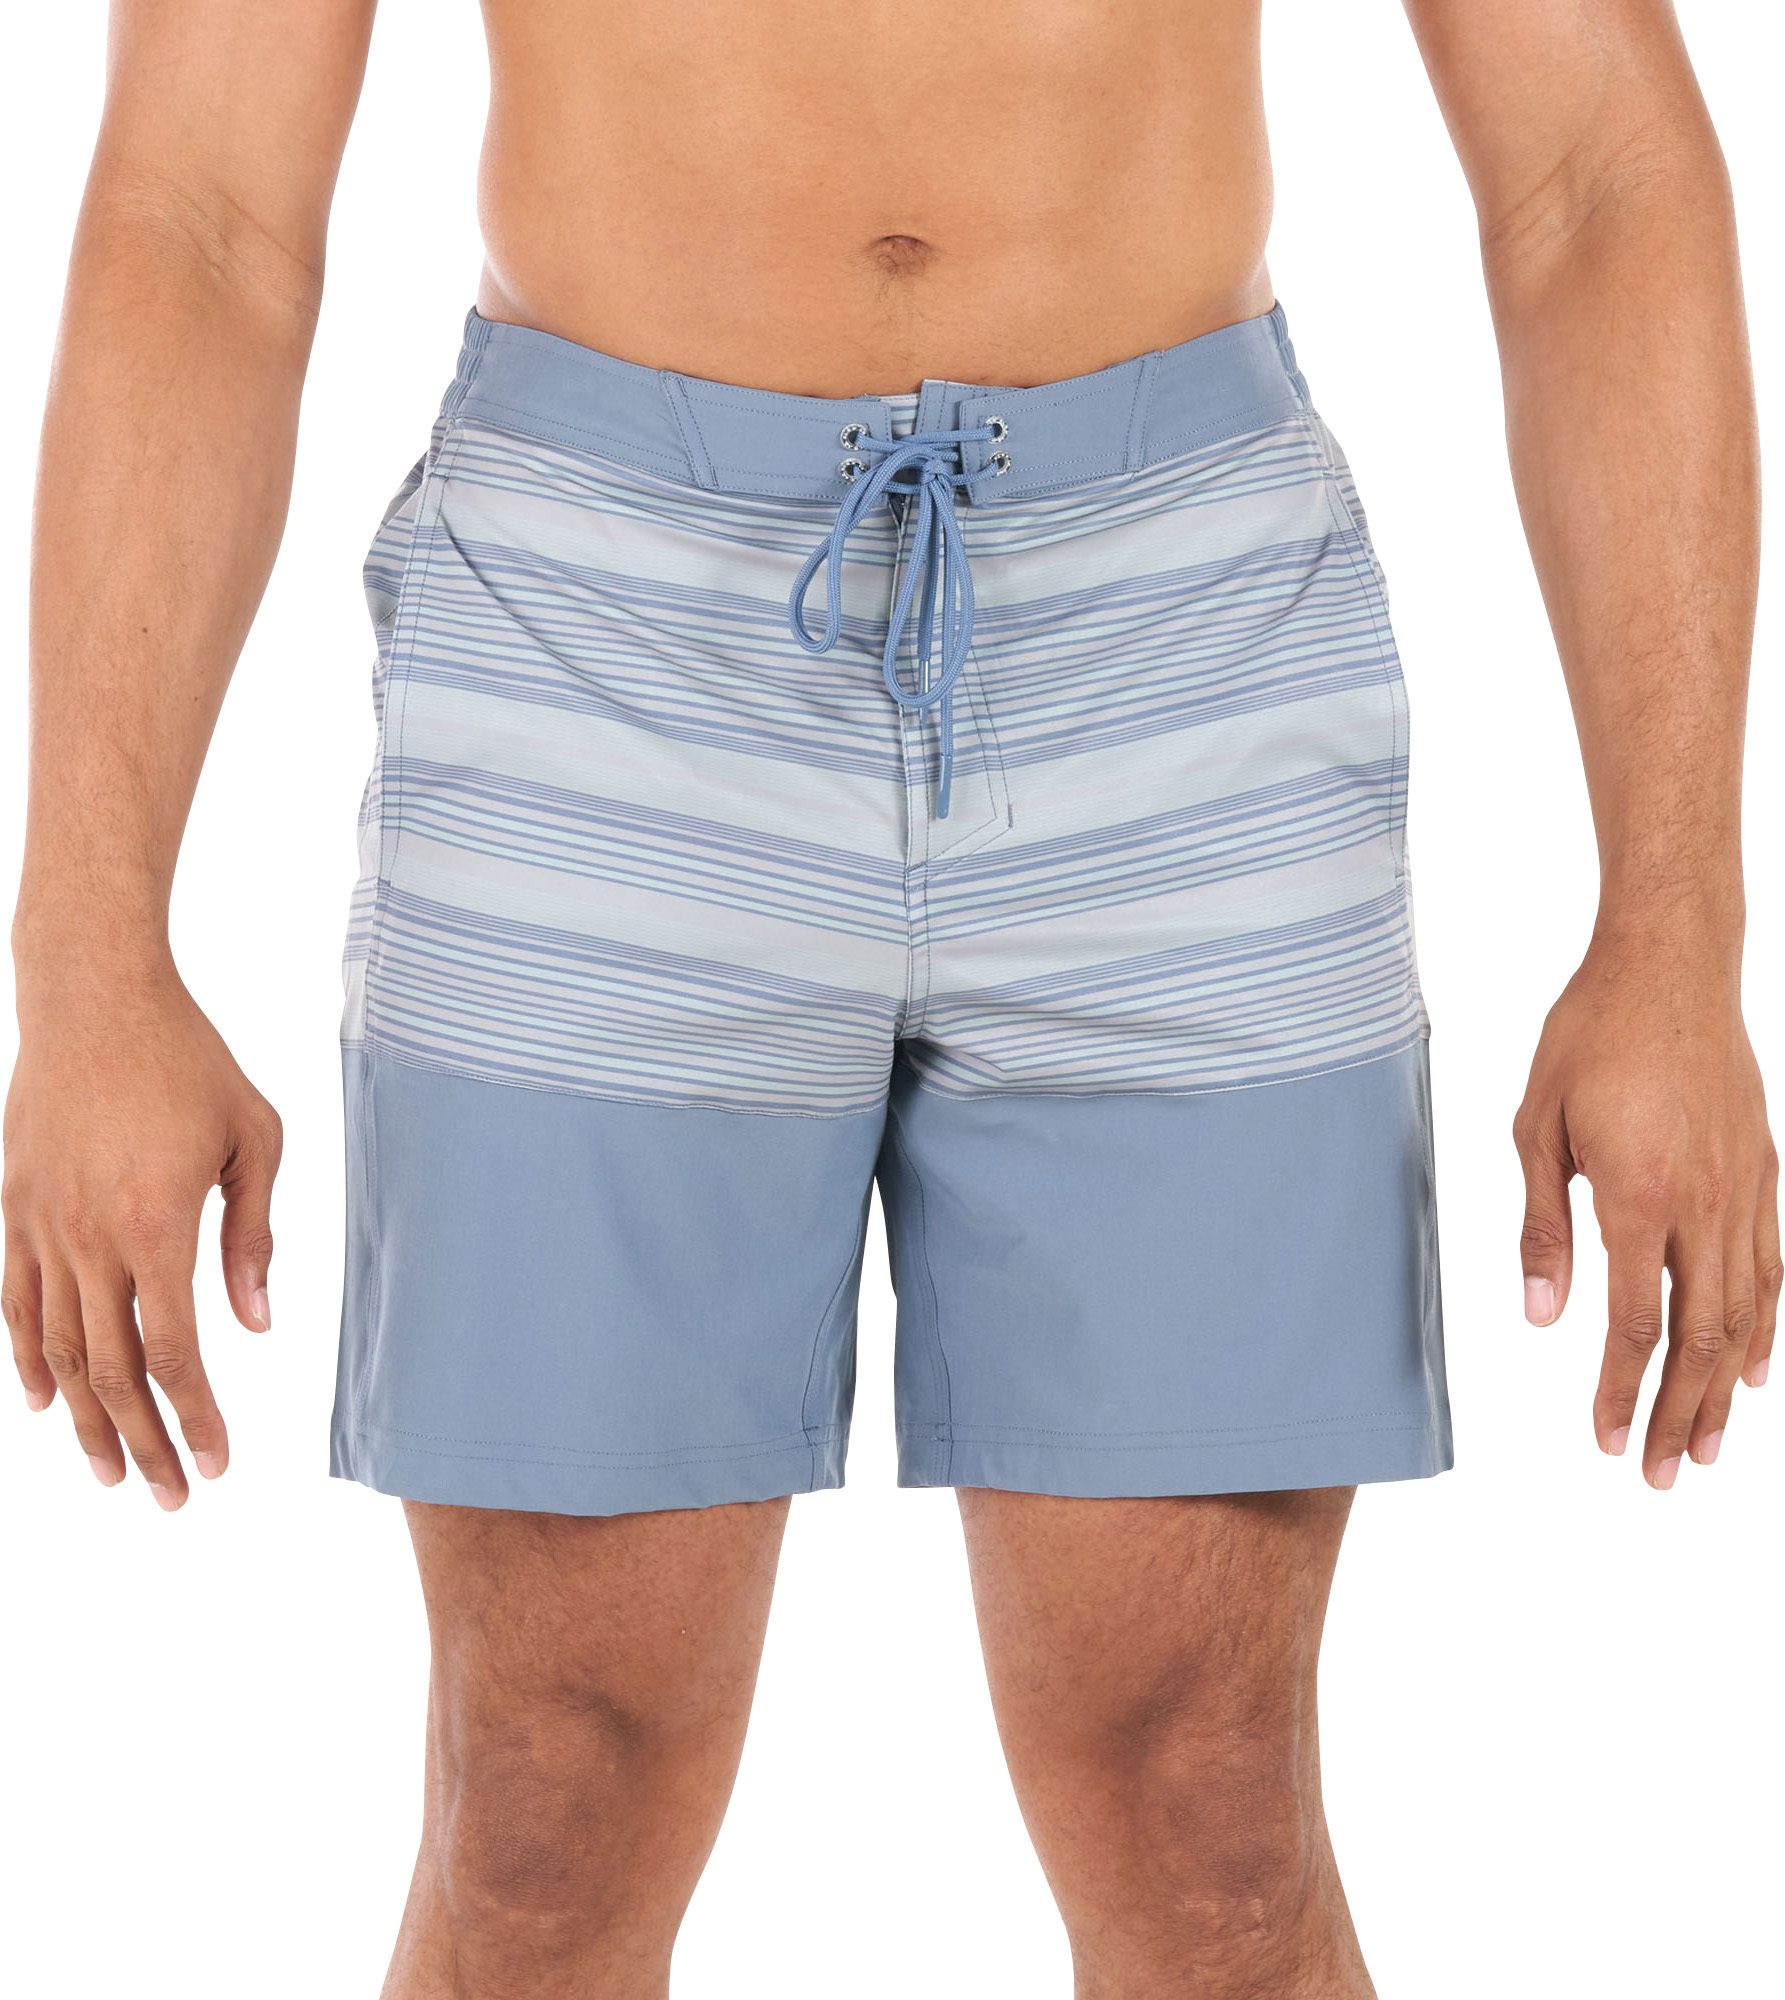 MEC Ace Liner Shorts - Men's